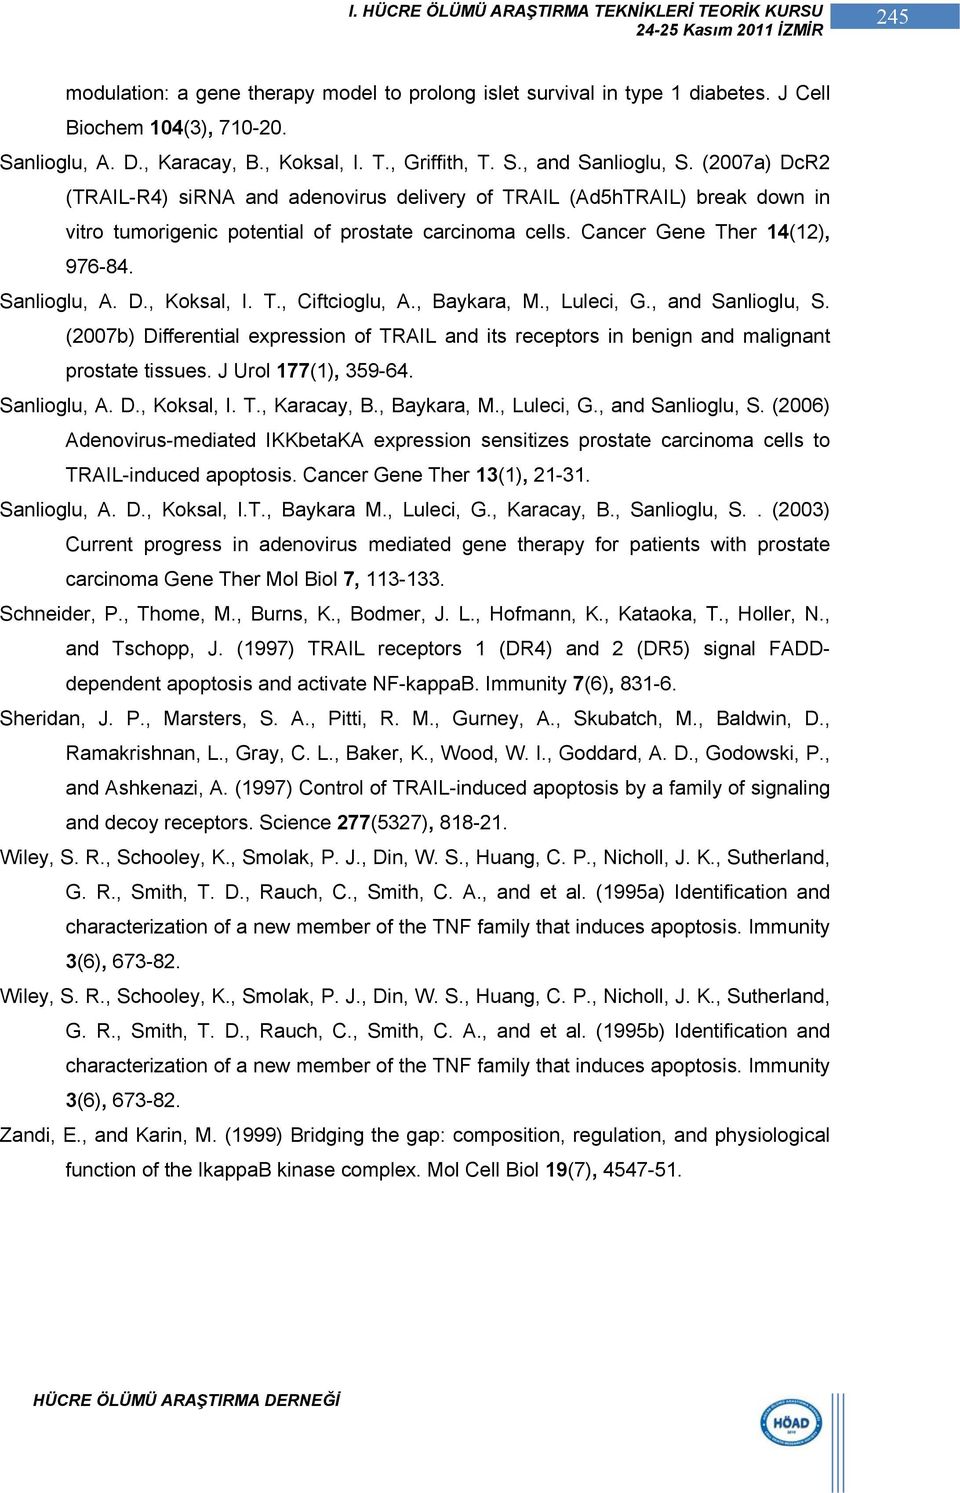 T., Ciftcioglu, A., Baykara, M., Luleci, G., and Sanlioglu, S. (2007b) Differential expression of TRAIL and its receptors in benign and malignant prostate tissues. J Urol 177(1), 359-64. Sanlioglu, A.